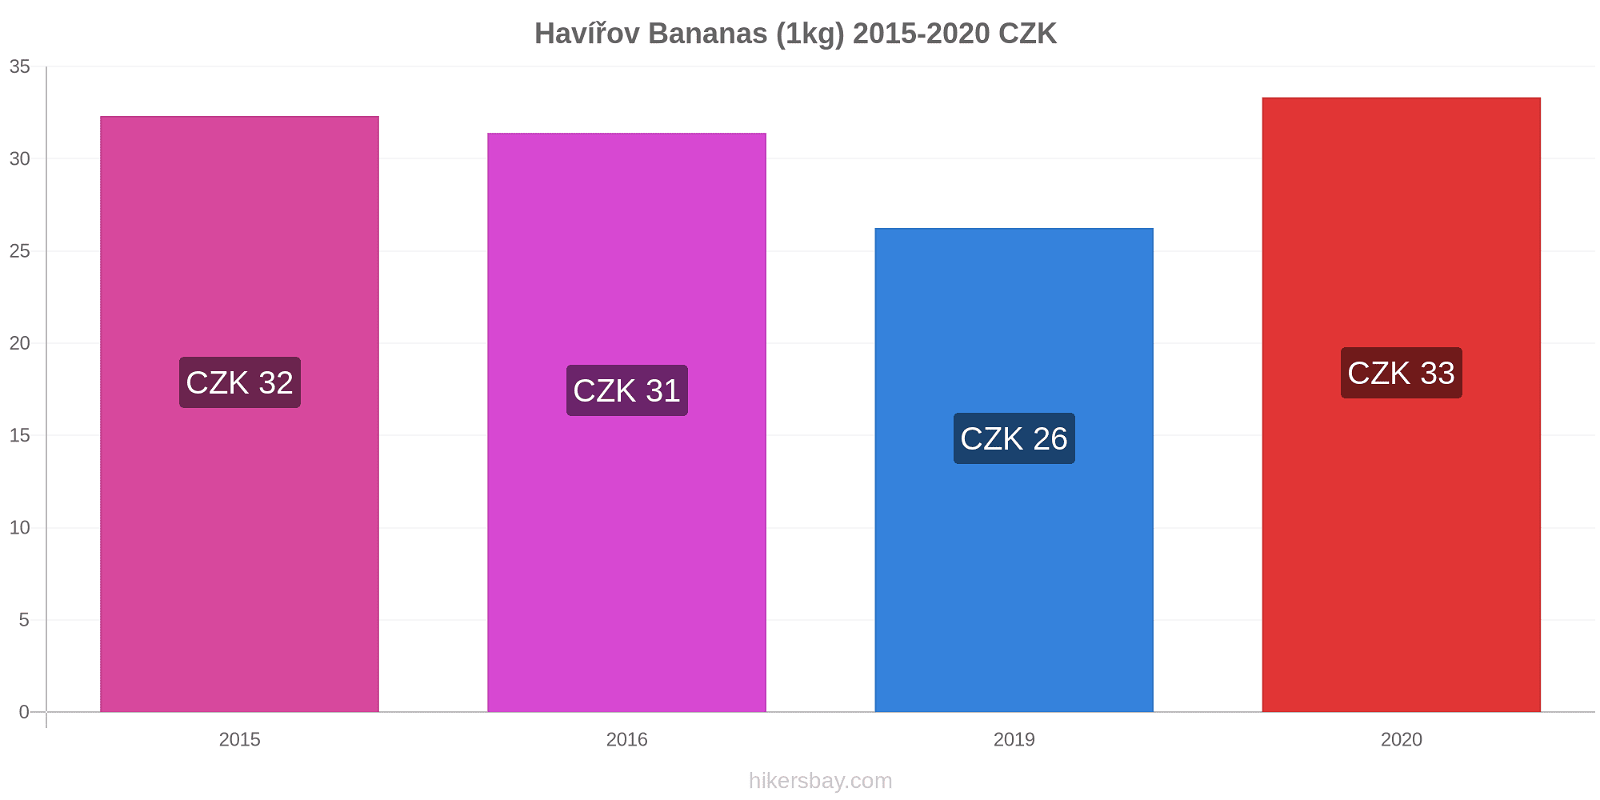 Havířov price changes Bananas (1kg) hikersbay.com